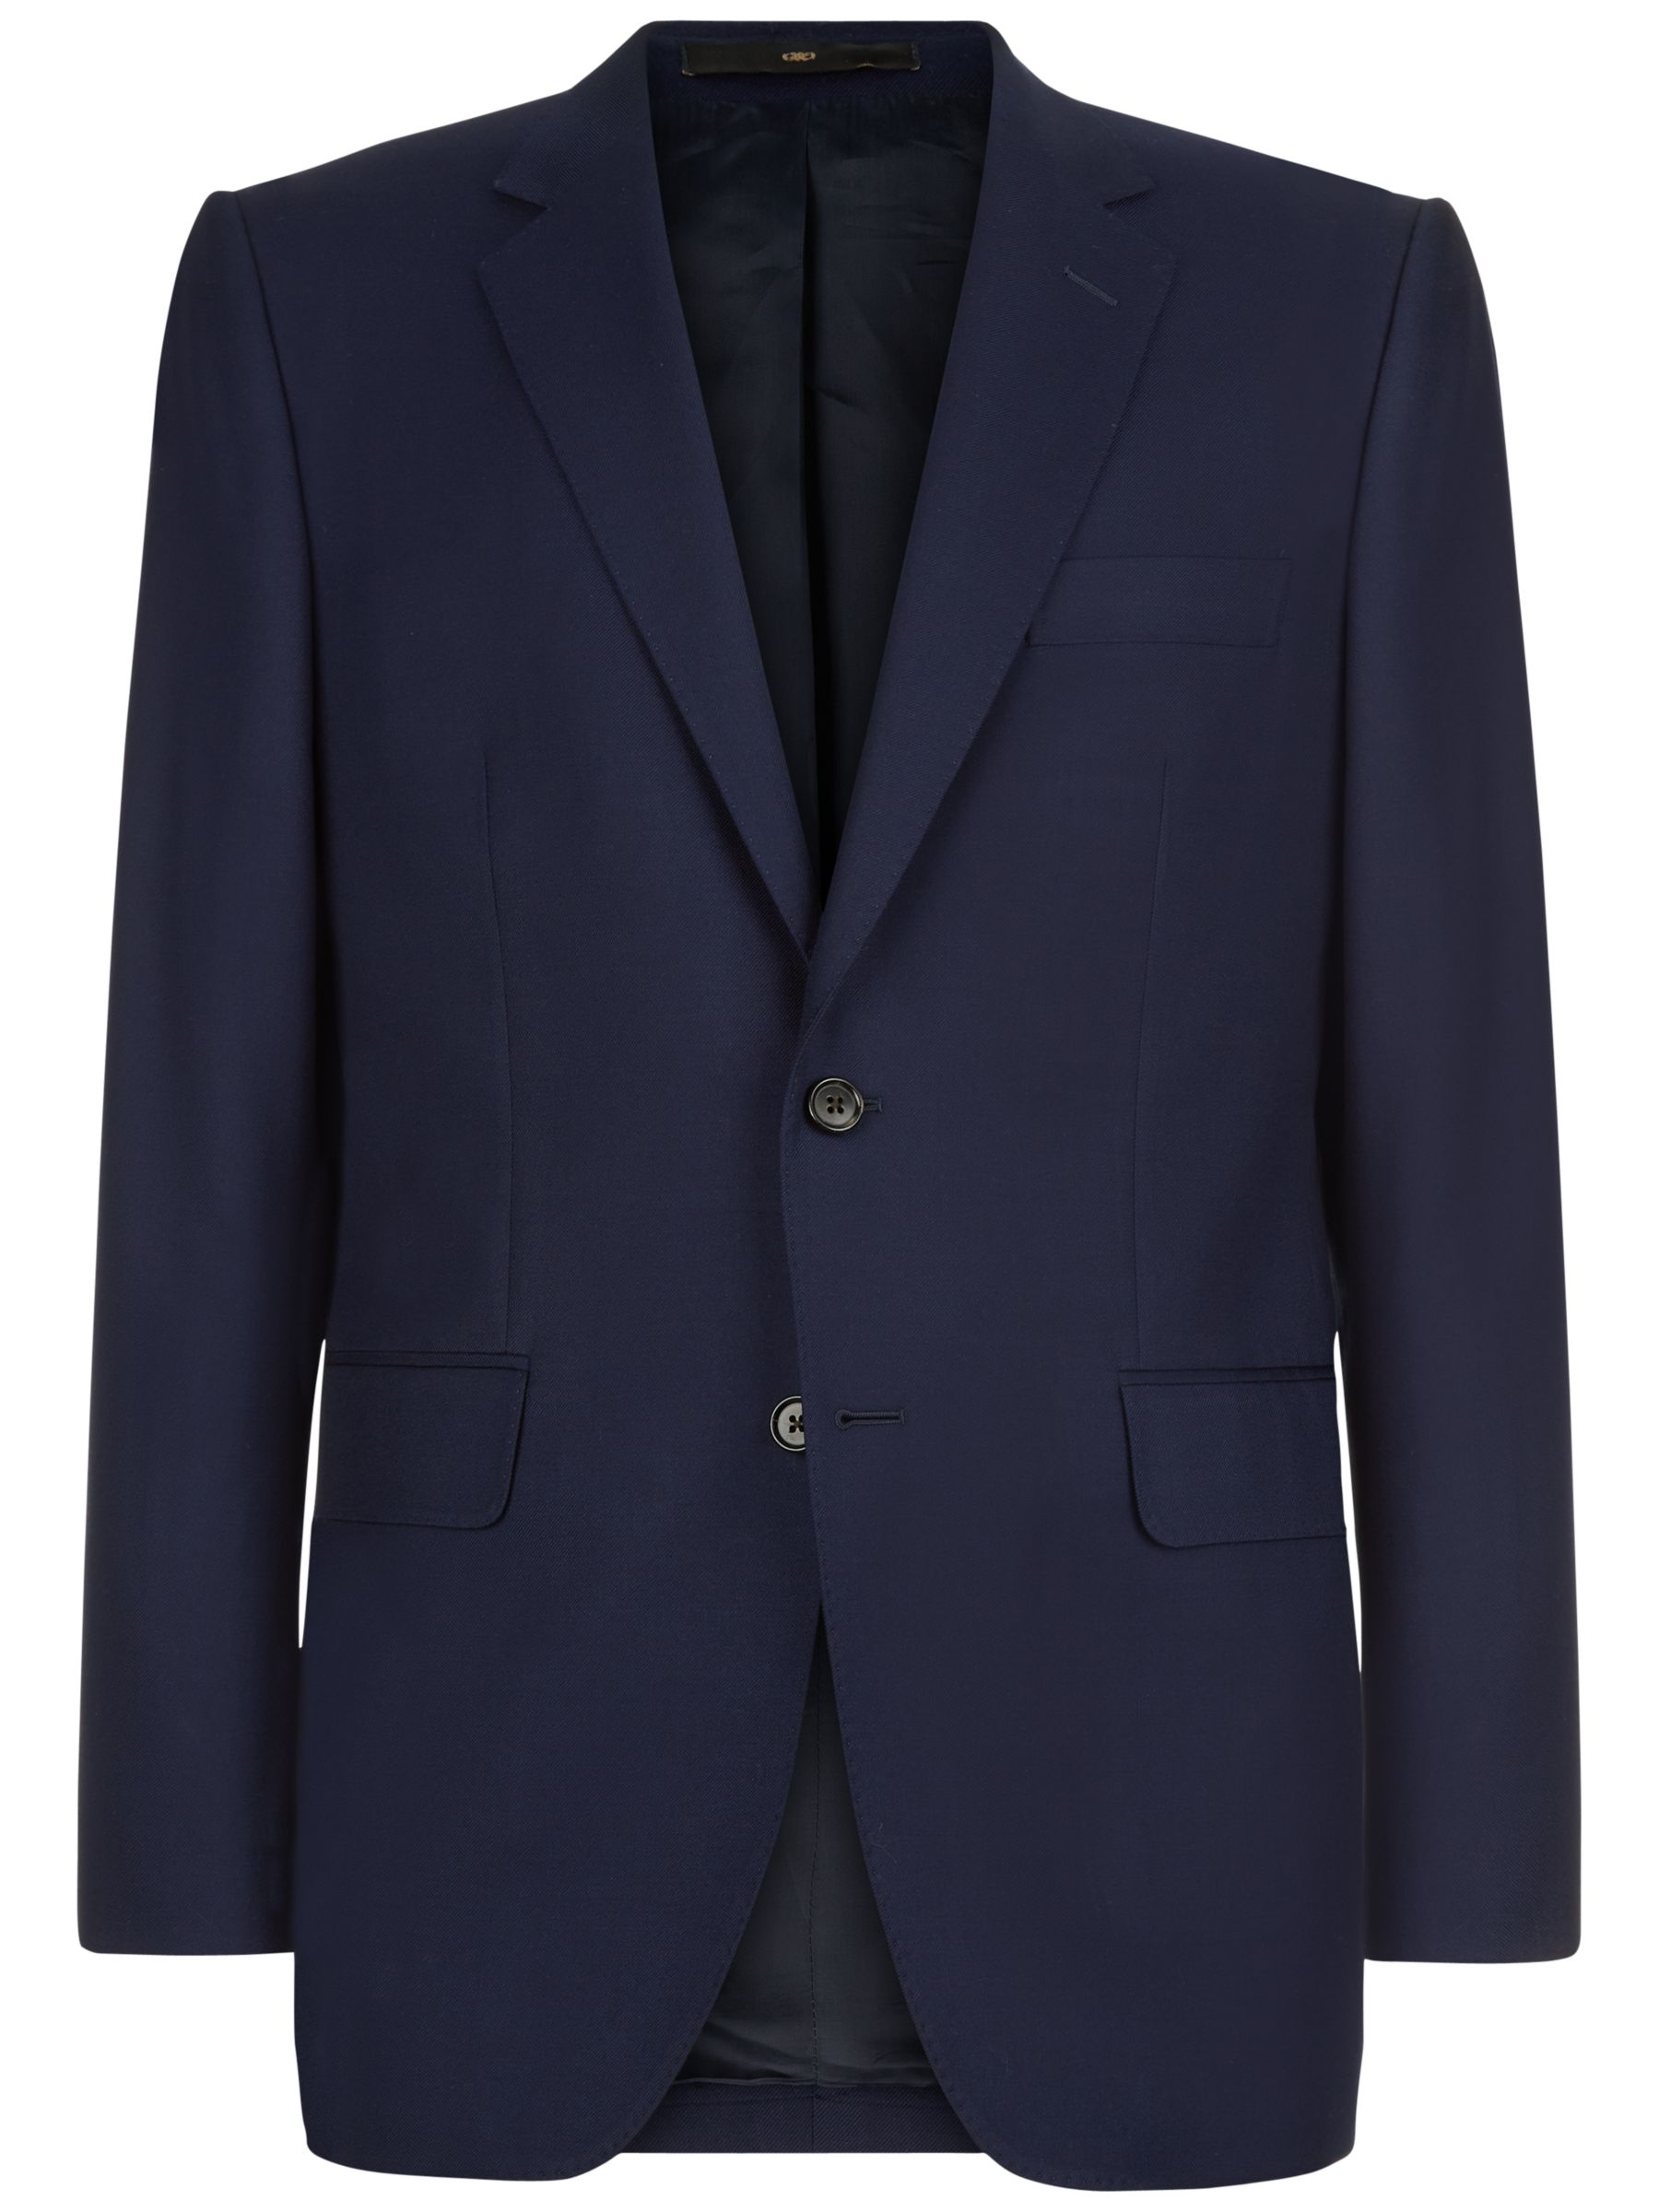 Jaeger Gostwyck Wool Classic Fit Suit Jacket, Navy